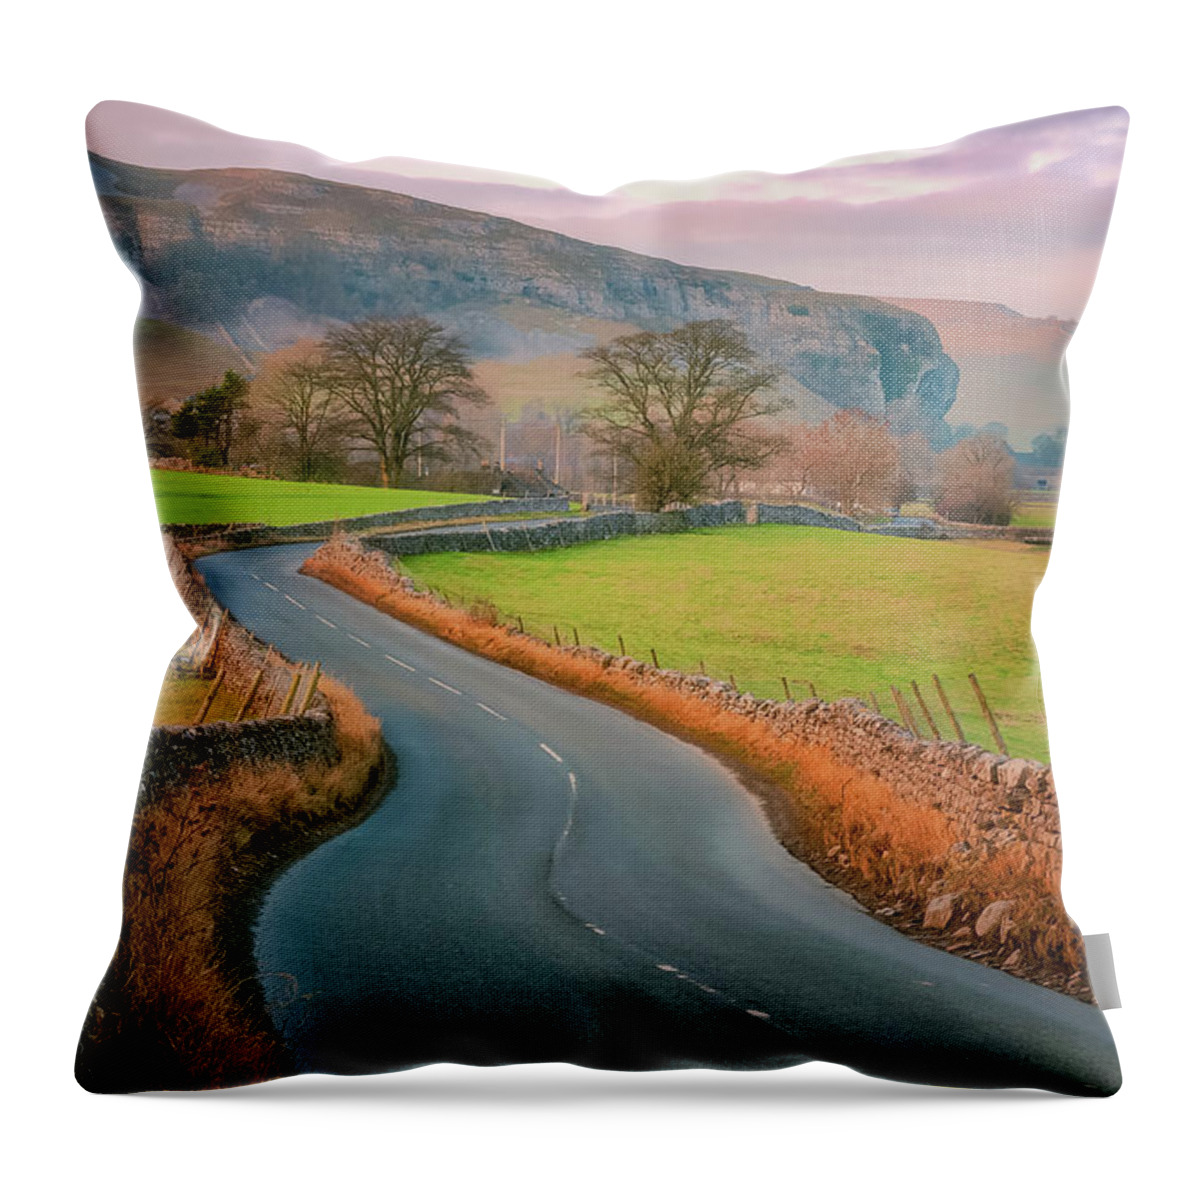 Buckden Throw Pillow featuring the photograph Road to Kilnsey by Mariusz Talarek